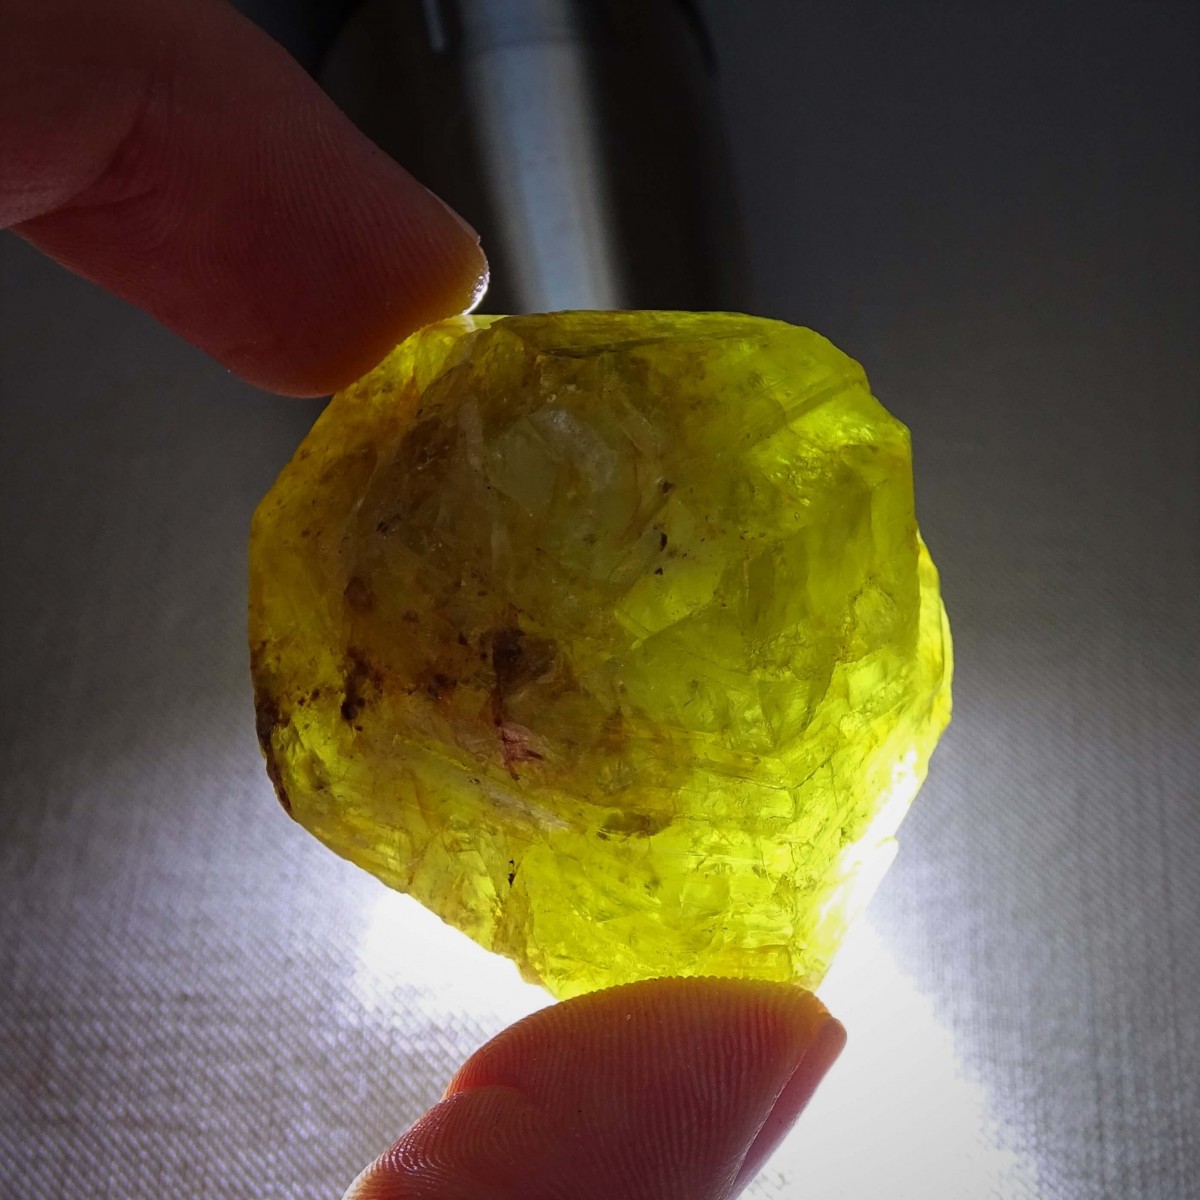 Garnet grosular lemon crystal 71,9g, Mali